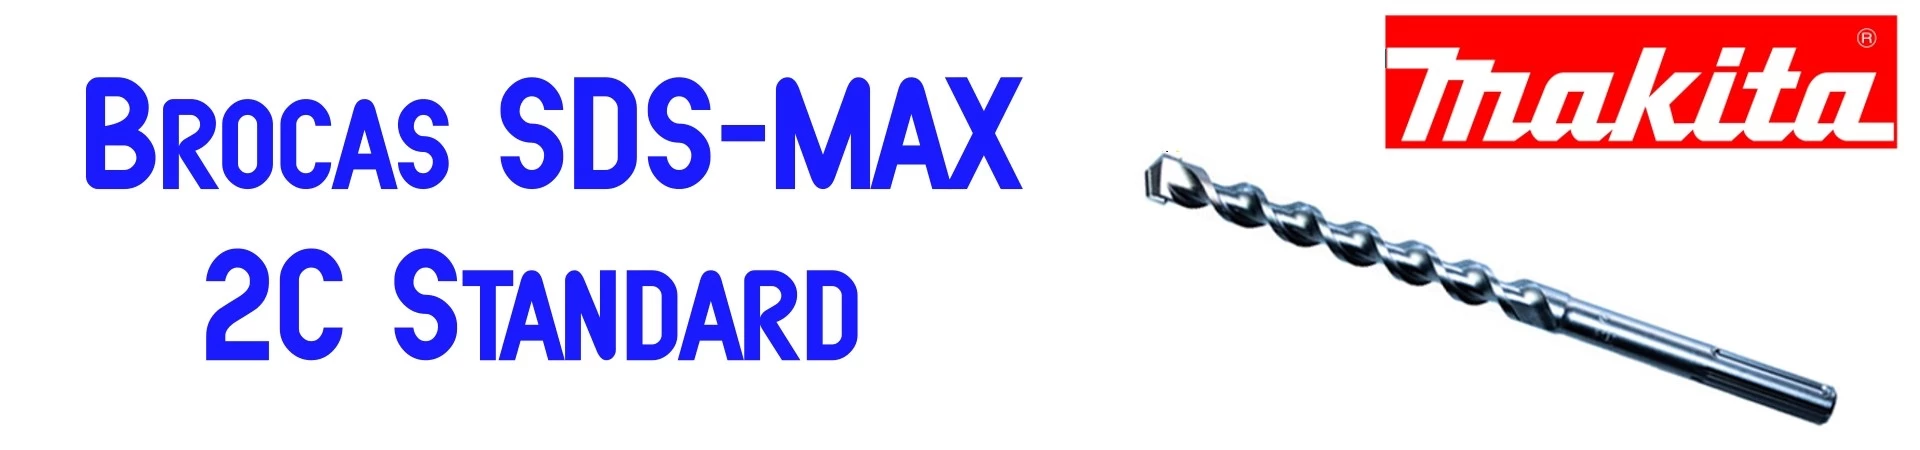 Brocas SDS-MAX 2C Standard